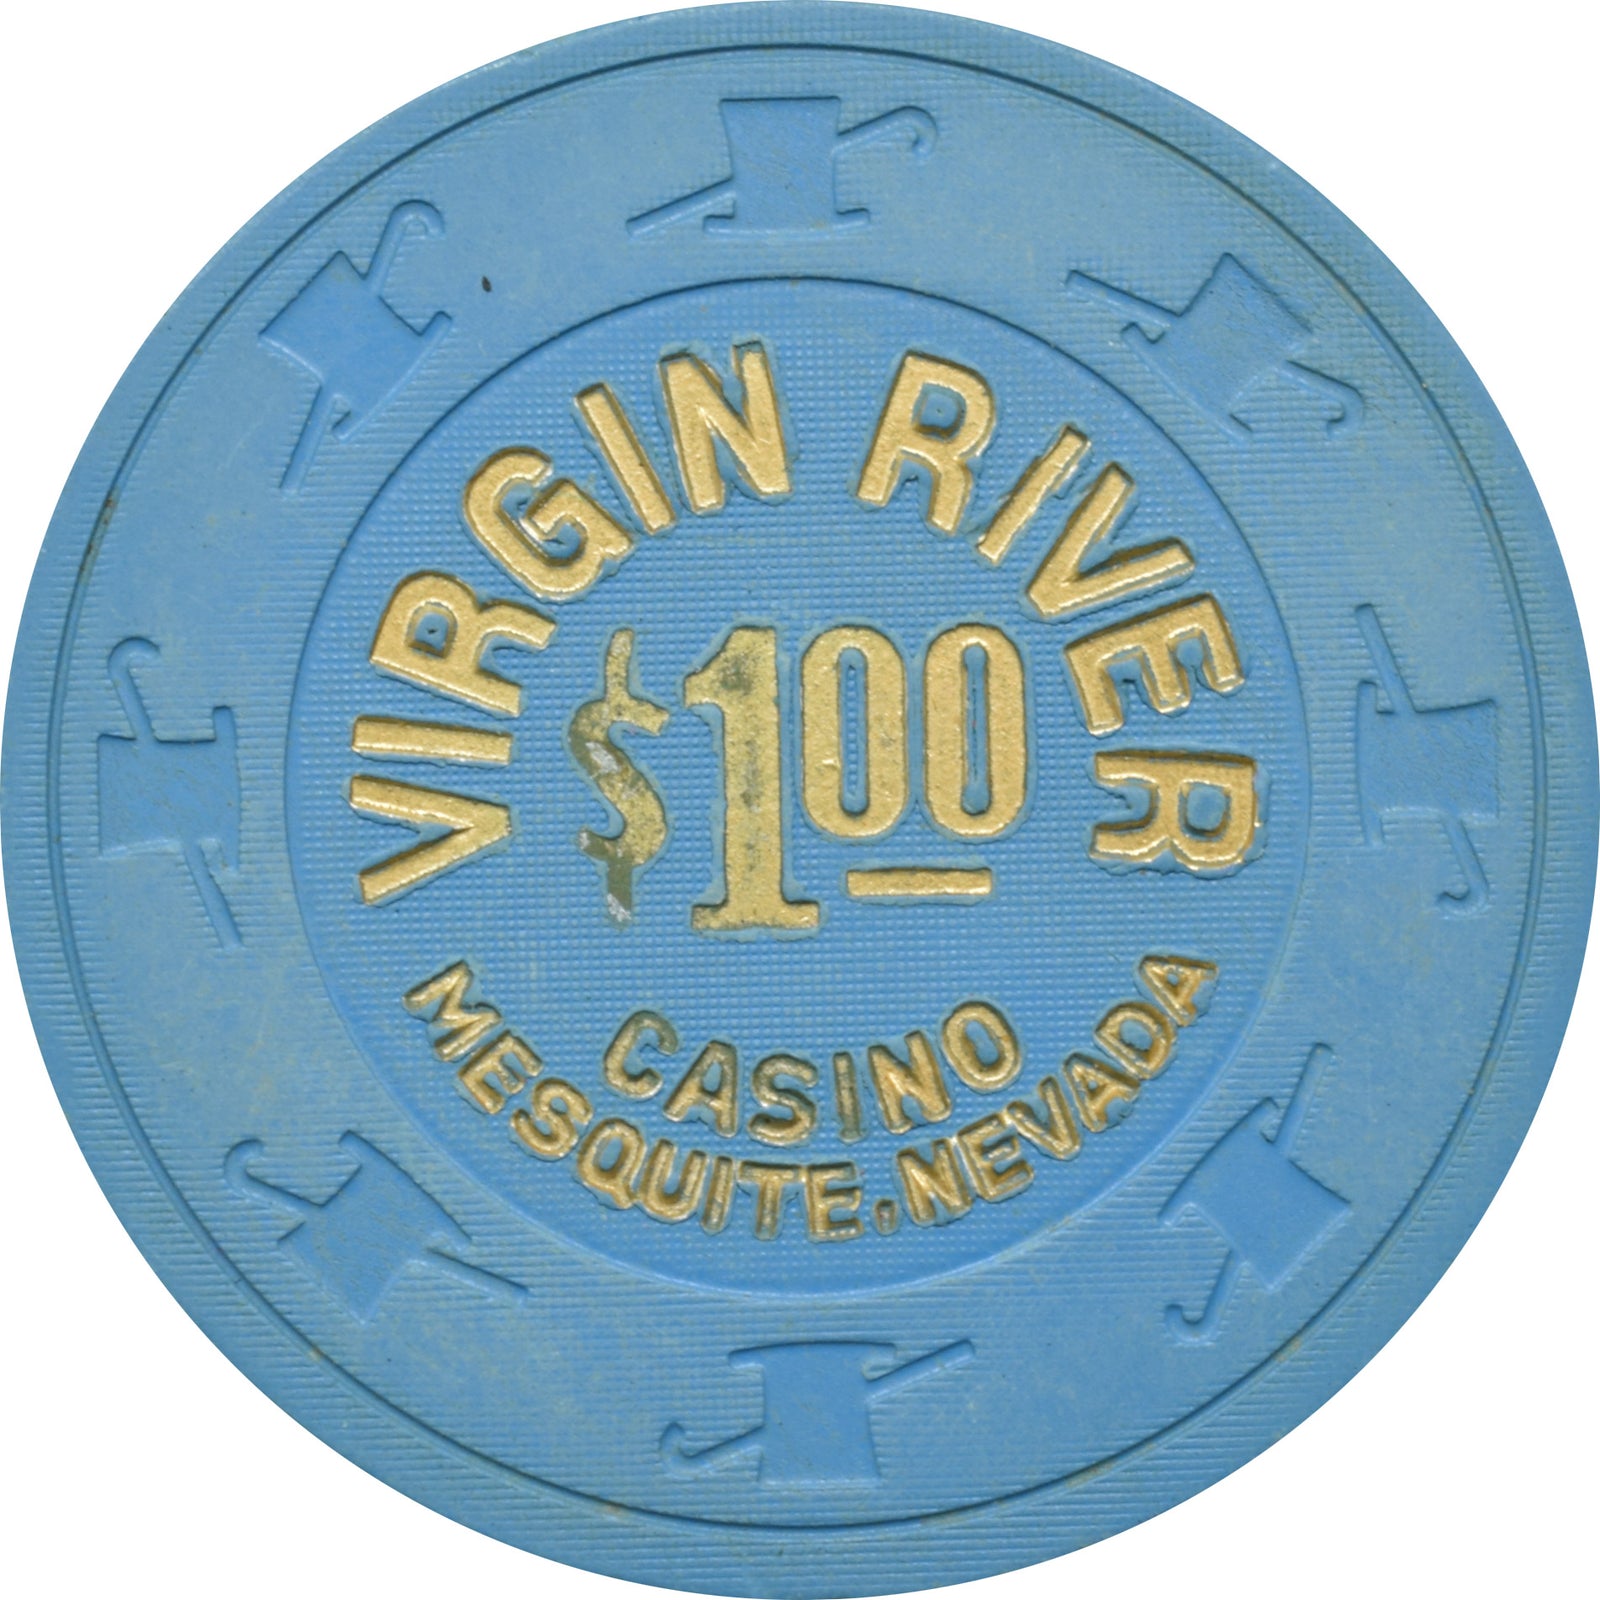 virgin river casino craft show